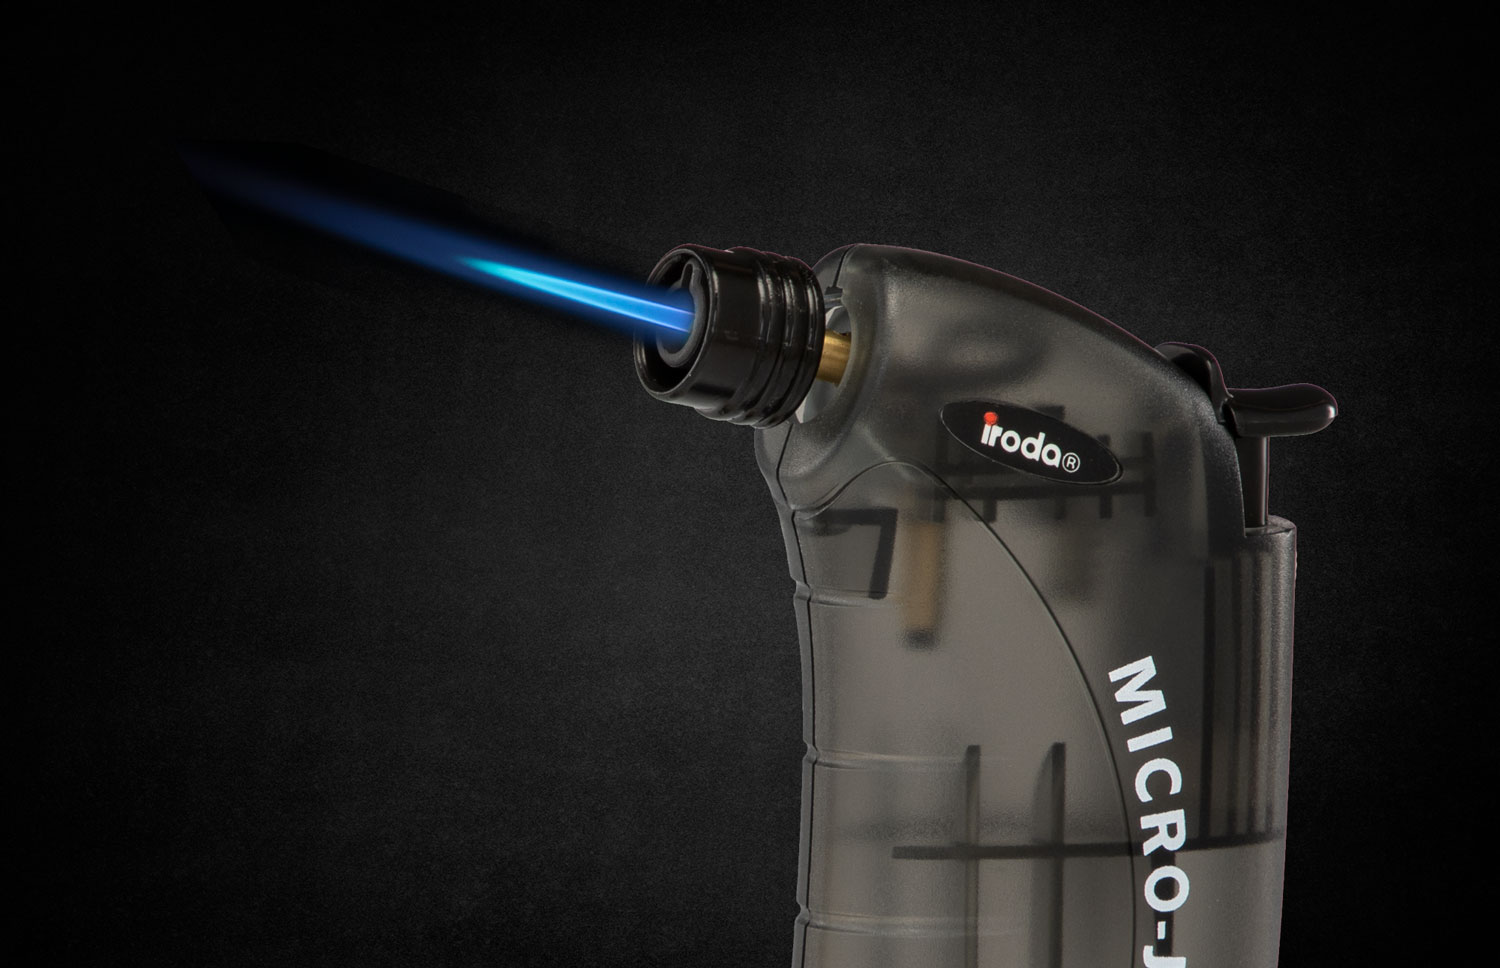 Iroda MJ-600 Cordless Refillable Butane Heat Gun